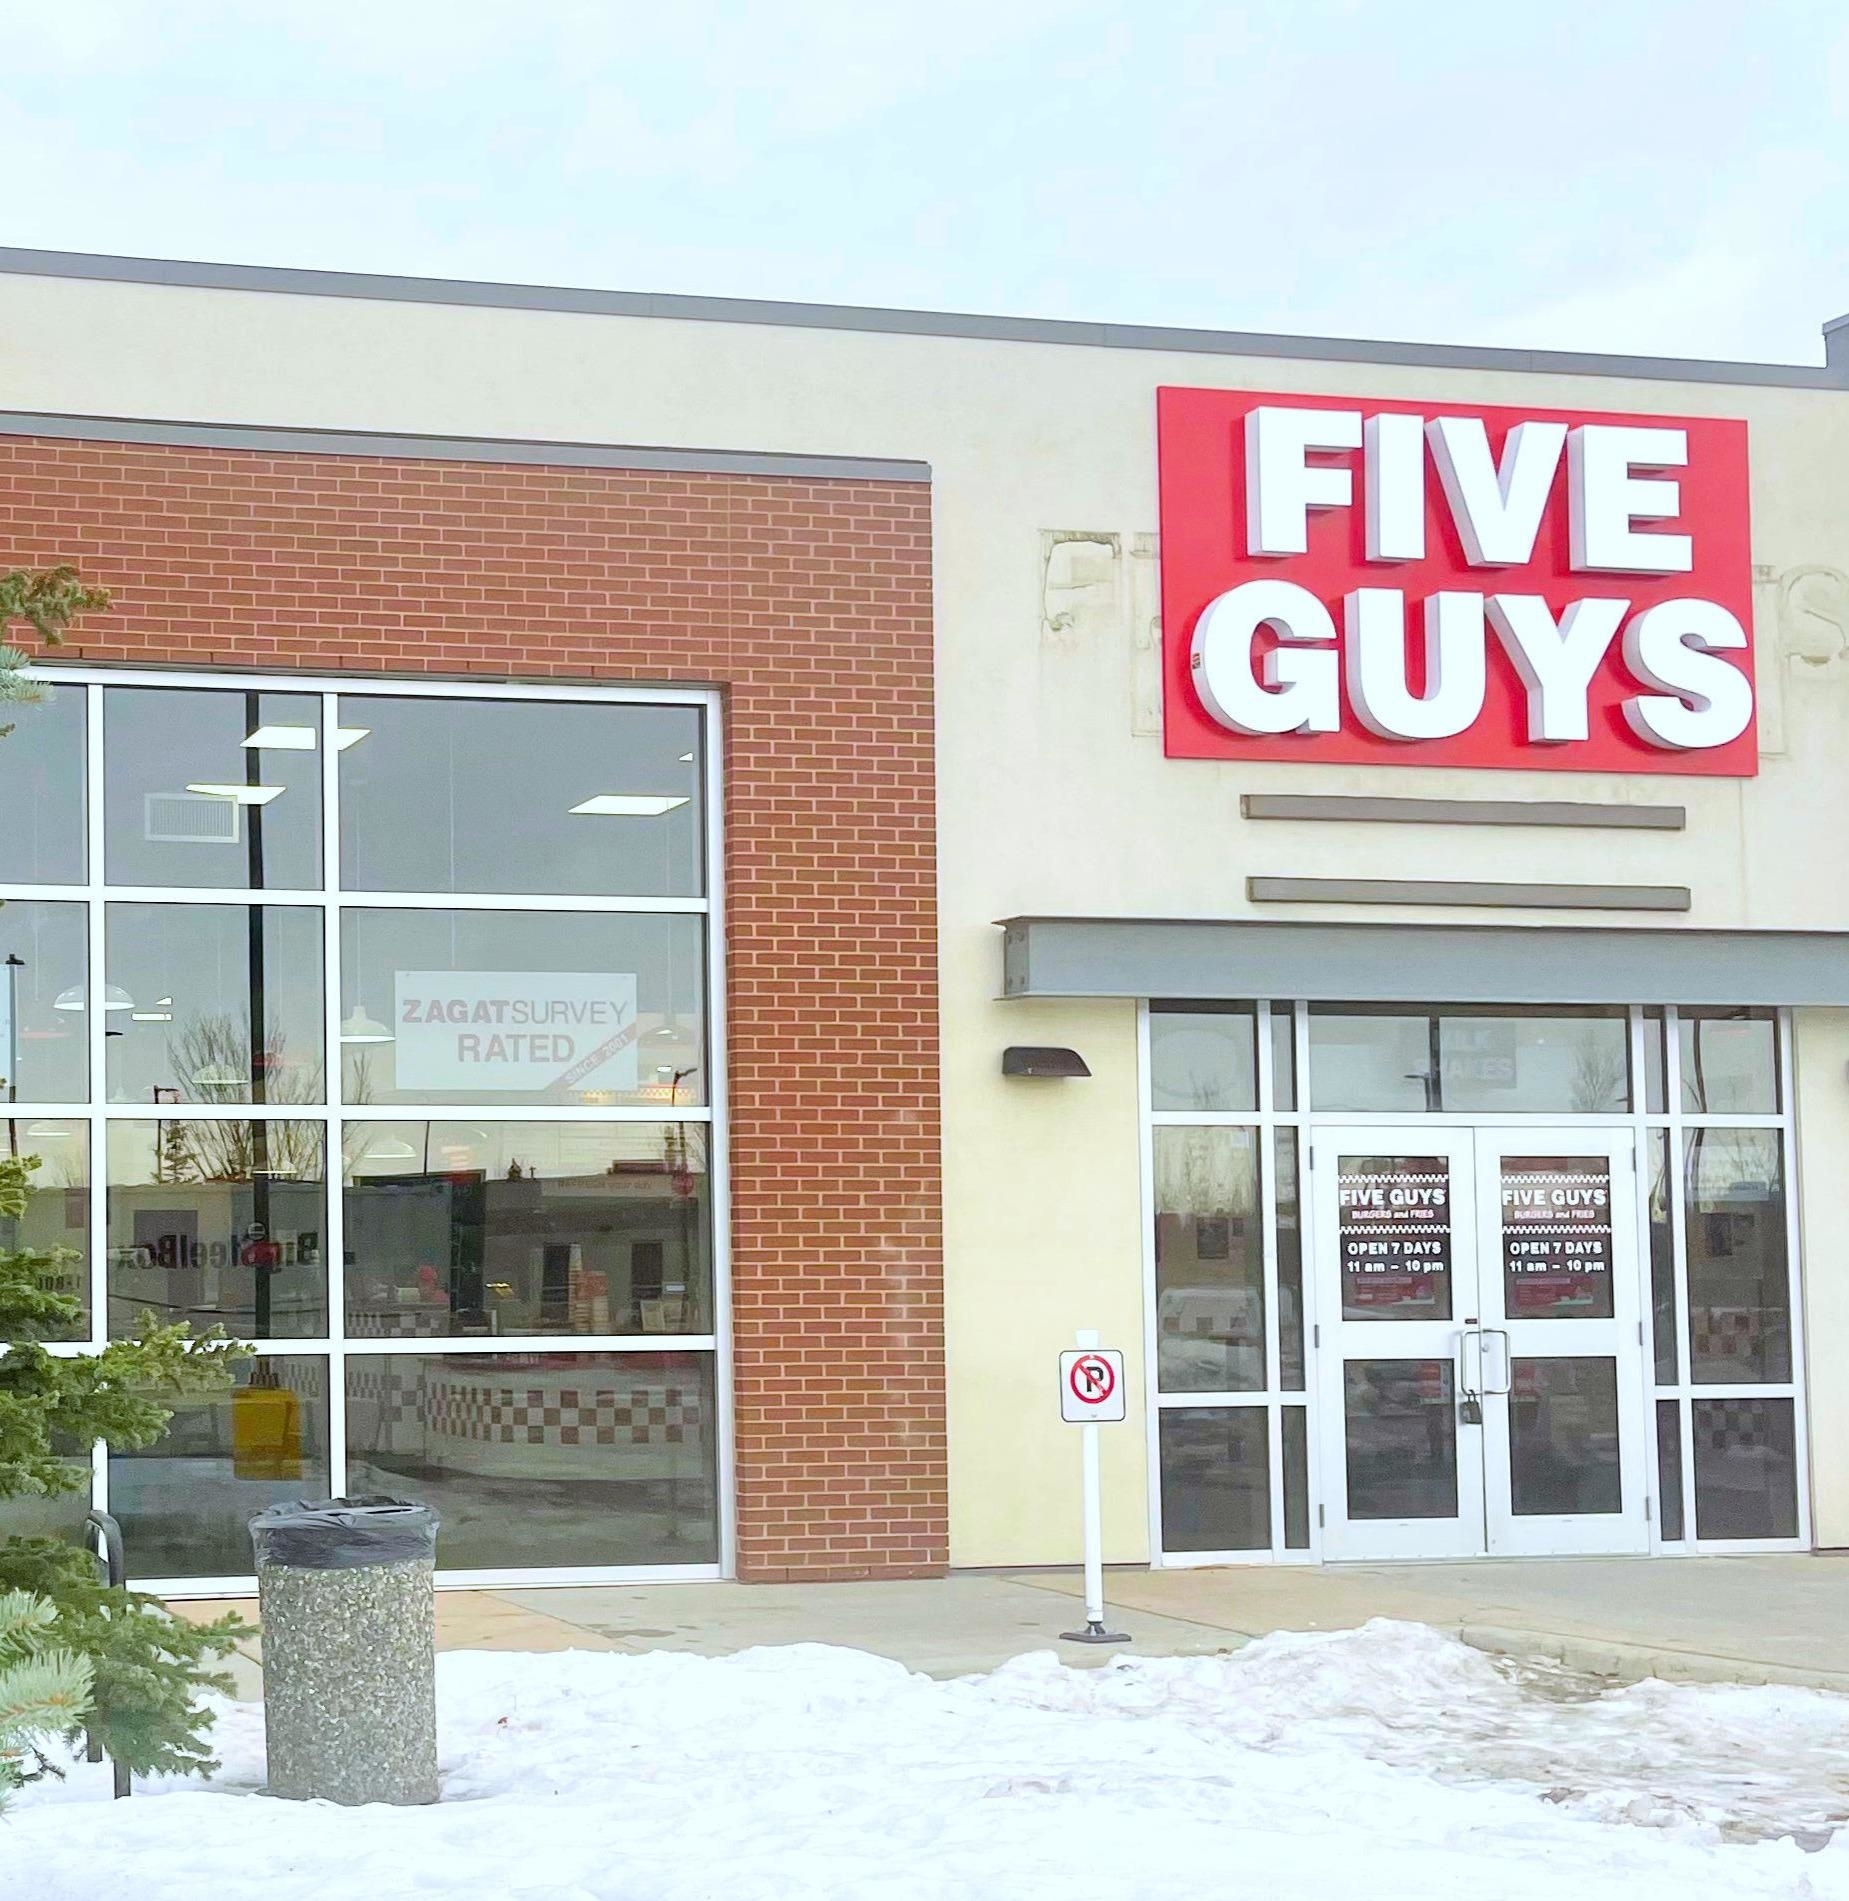 Five Guys - Fast Food Restaurants